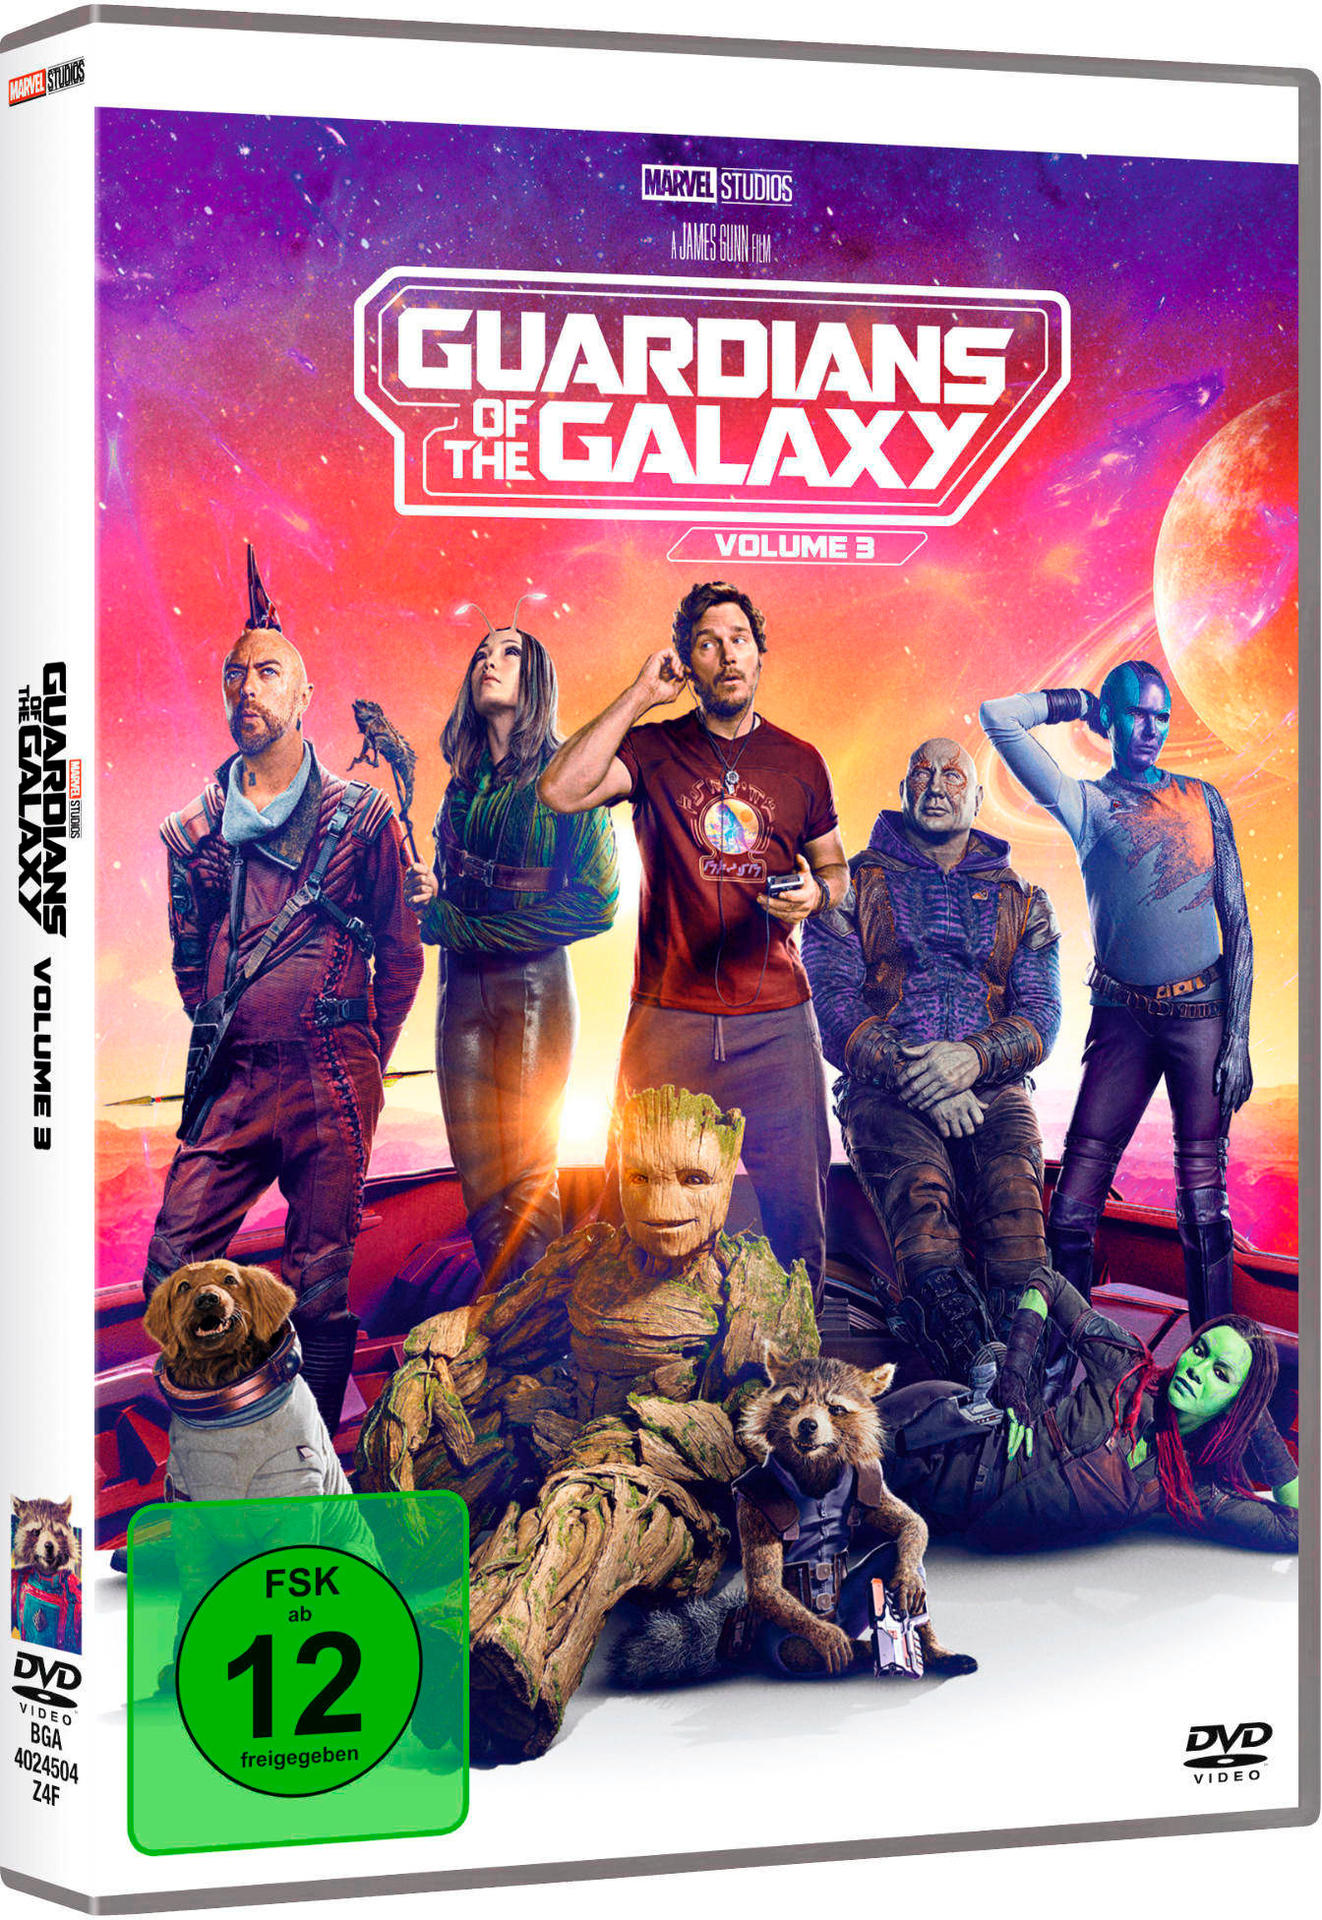 Vol. the of 3 Guardians DVD Galaxy